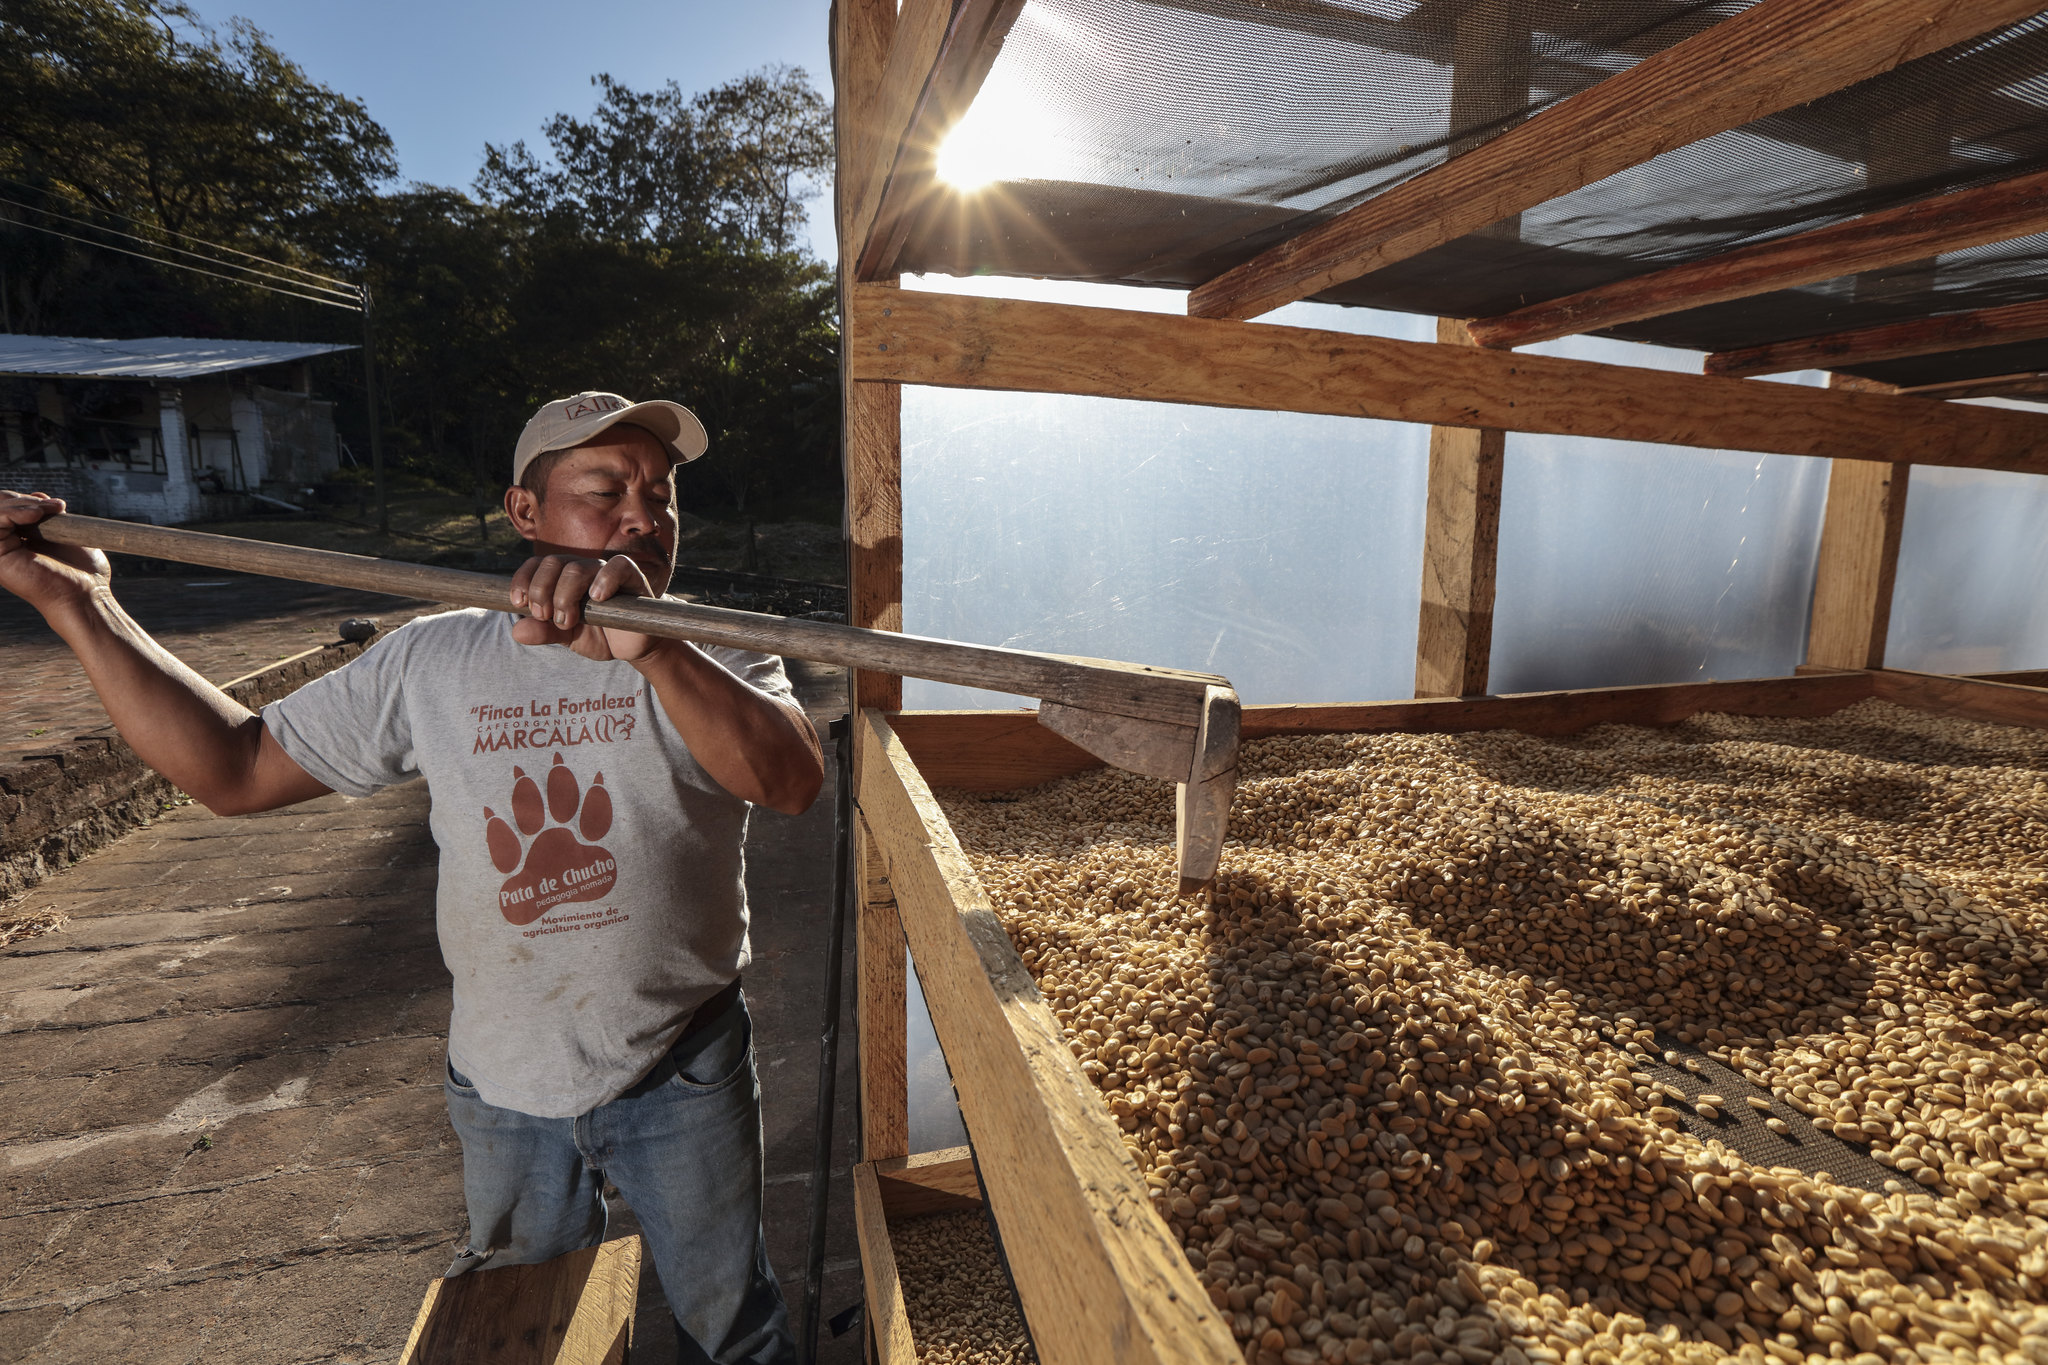 <p>Um fazendeiro em Honduras seca grãos de café (Imagem: Flickr / <a href="https://www.flickr.com/photos/27781737@N05/33155667845/in/photolist-b6WsTn-jALJYU-25n8HWT-BPiifq-24JWi3R-24FbWyE-23E9xVo-SjDKzV-RijBSz-RLTJTH-F5SuEr-Sndbxq-RW5z2h-SvRsVB-RgRKyX-SxoyAN-Sm5Vnz-SpL558-RfFrKN-Sm5UjH-ReaS2E-RW2YbE-RgRX6z-Redxw7-zvKkn6-RgPqmn-N6FUWB-Joj8uA-27Dve3H">Maren Barbee</a>)</p>